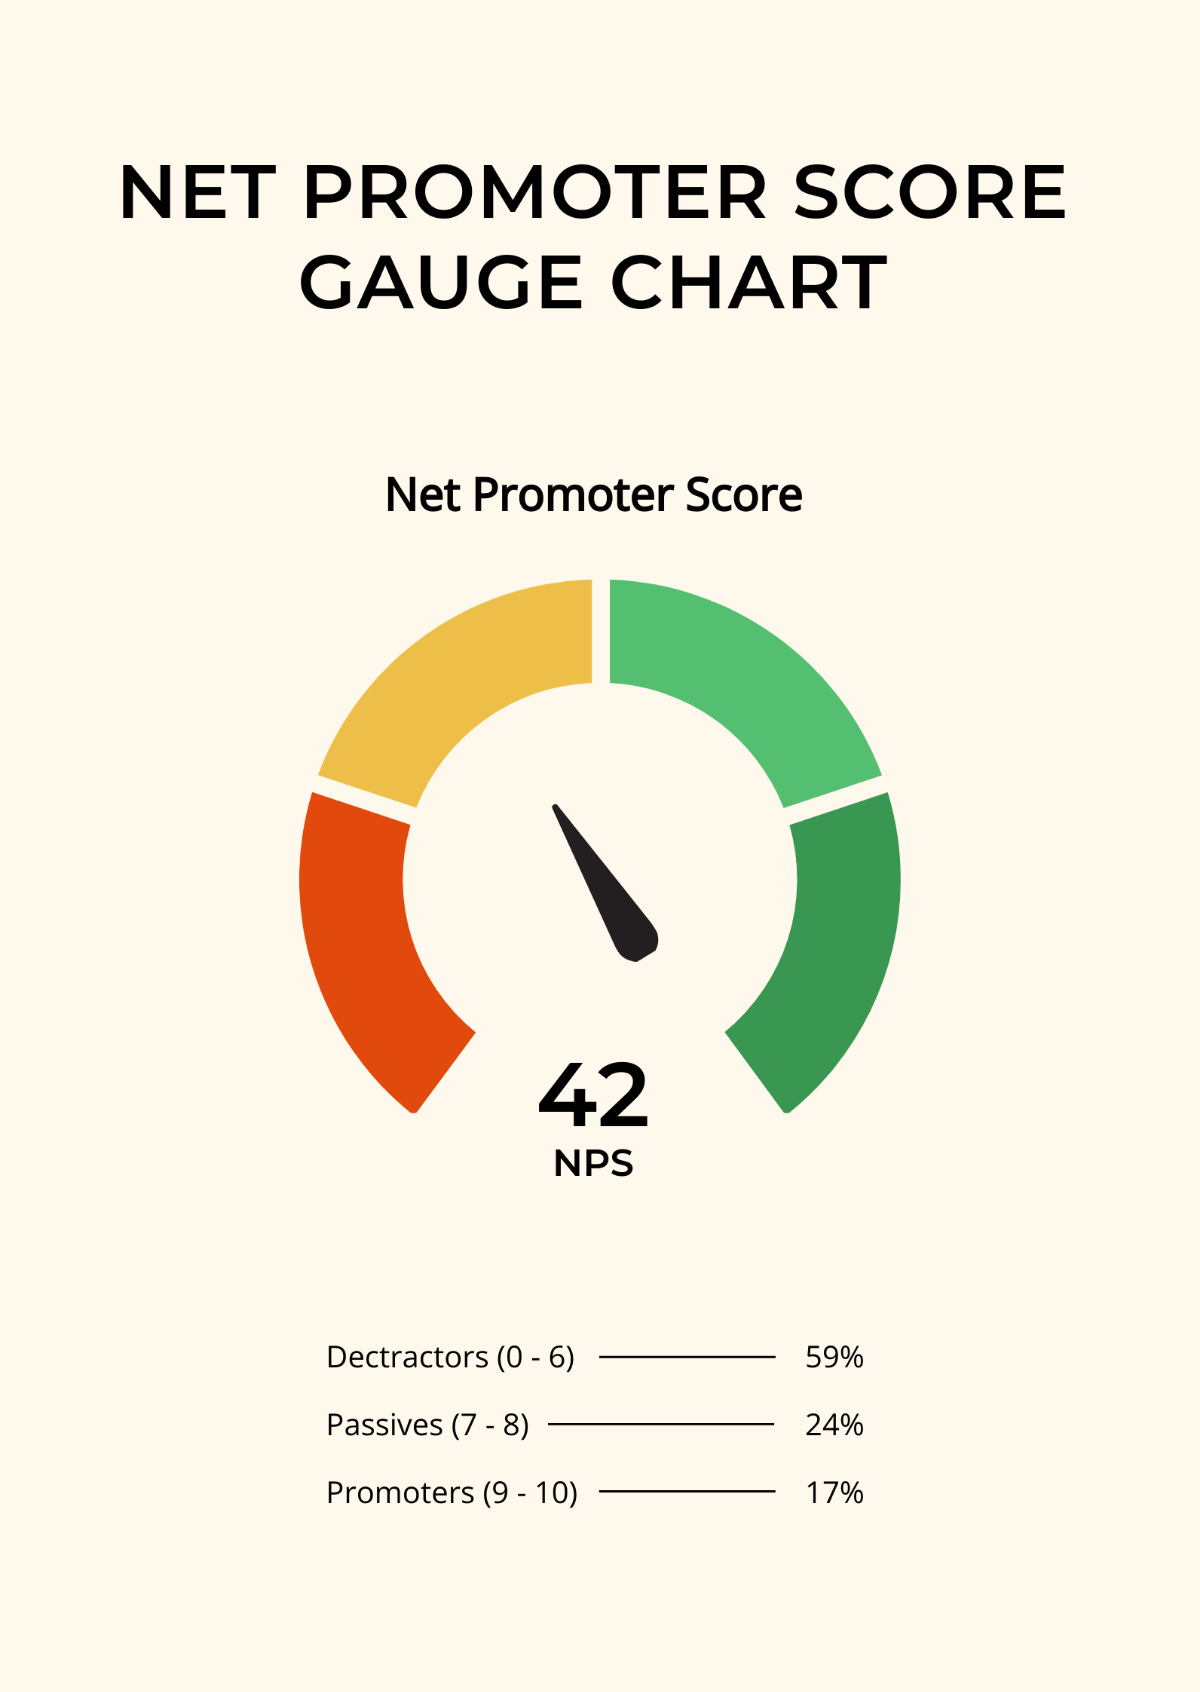 Net Promoter Score Gauge Chart Template